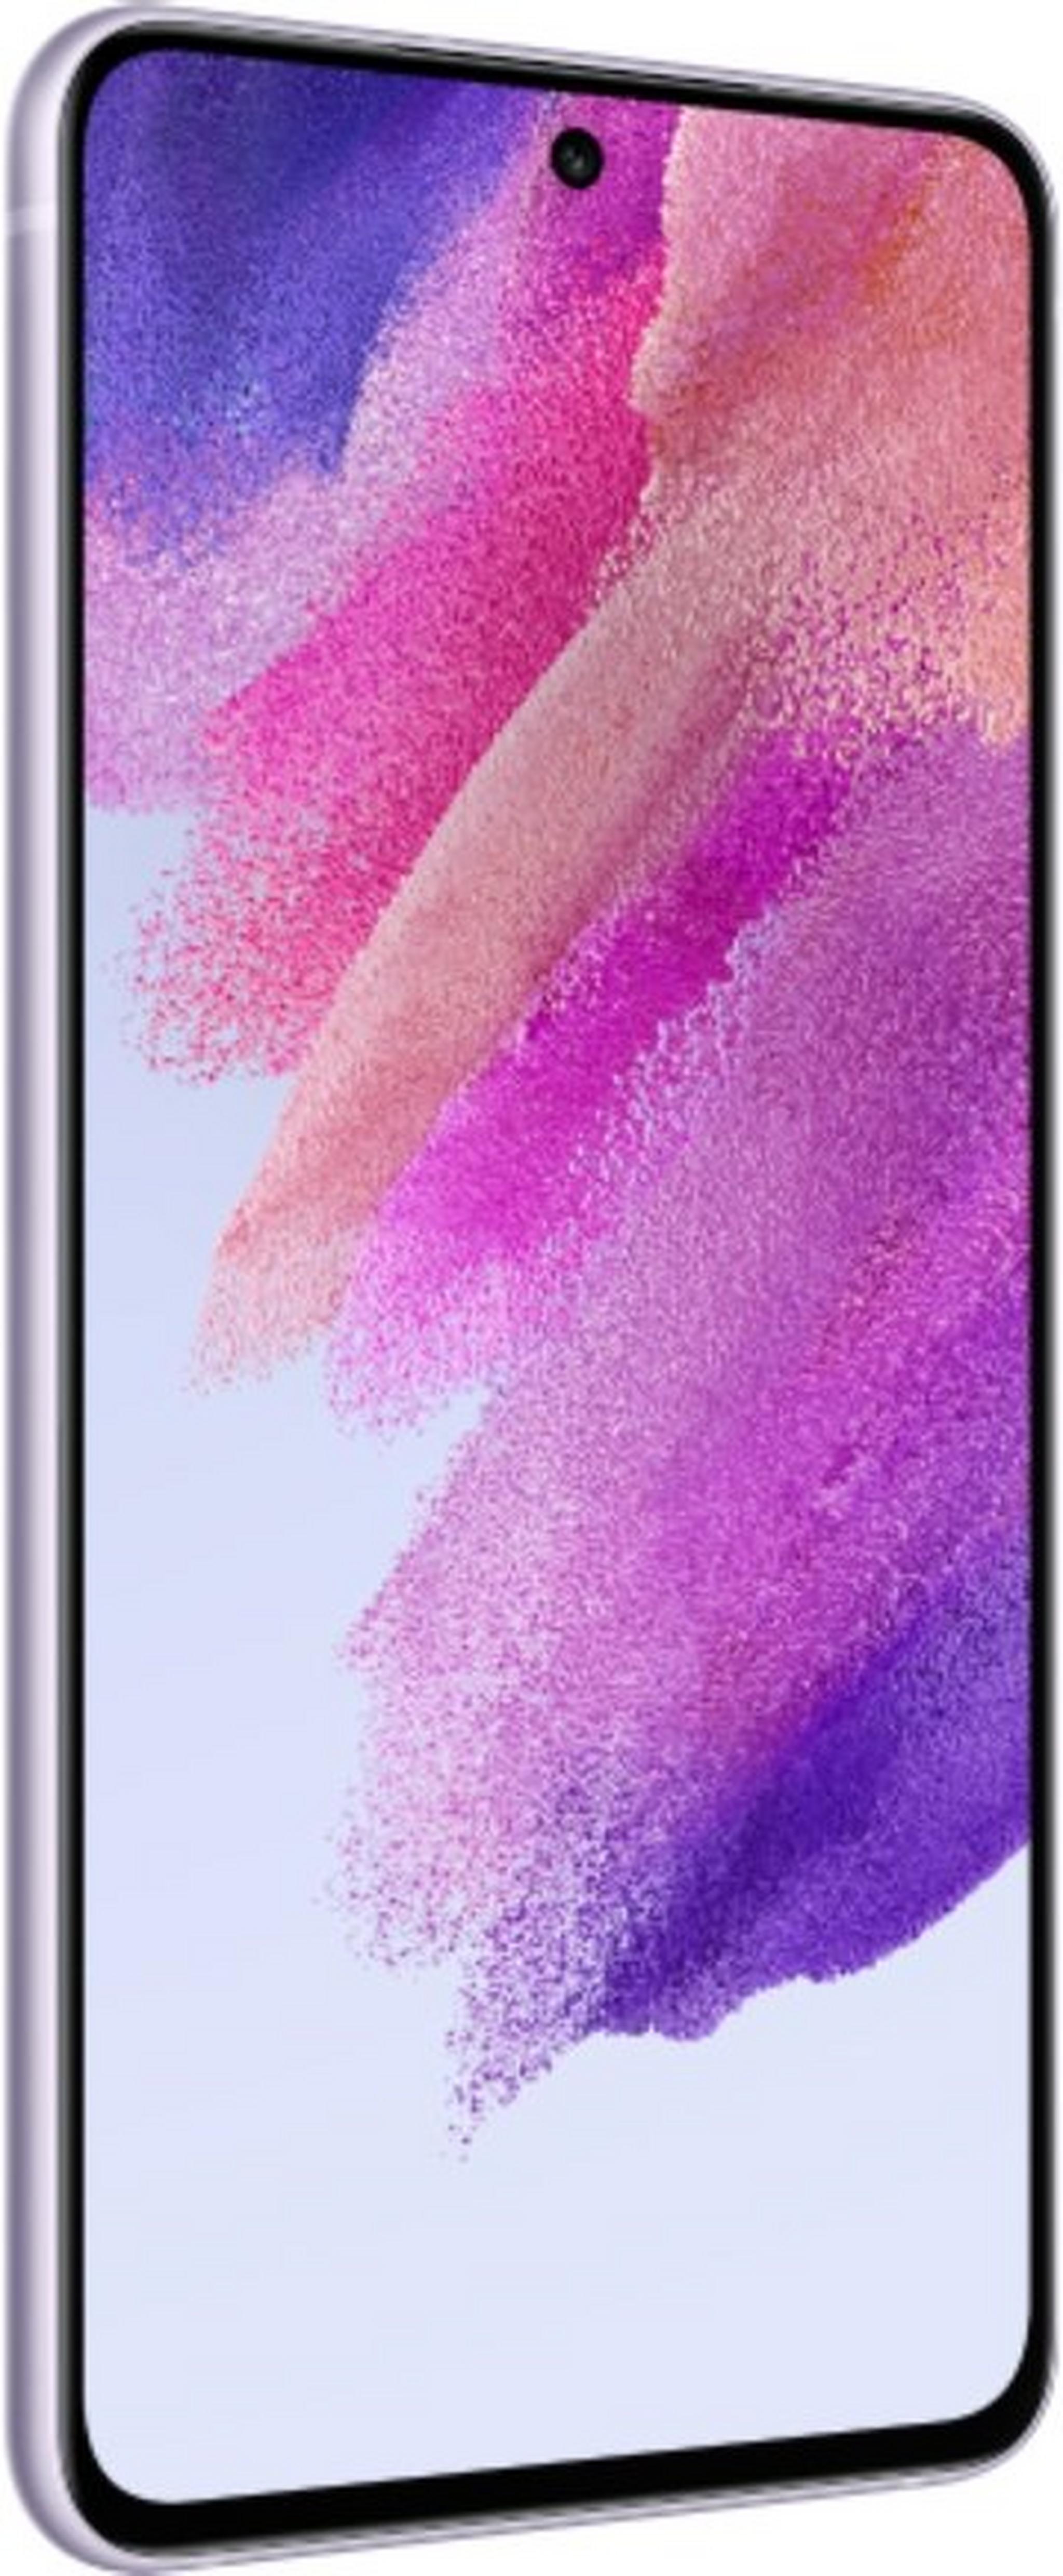 Samsung Galaxy S21 FE 5G 128GB Phone - Lavender